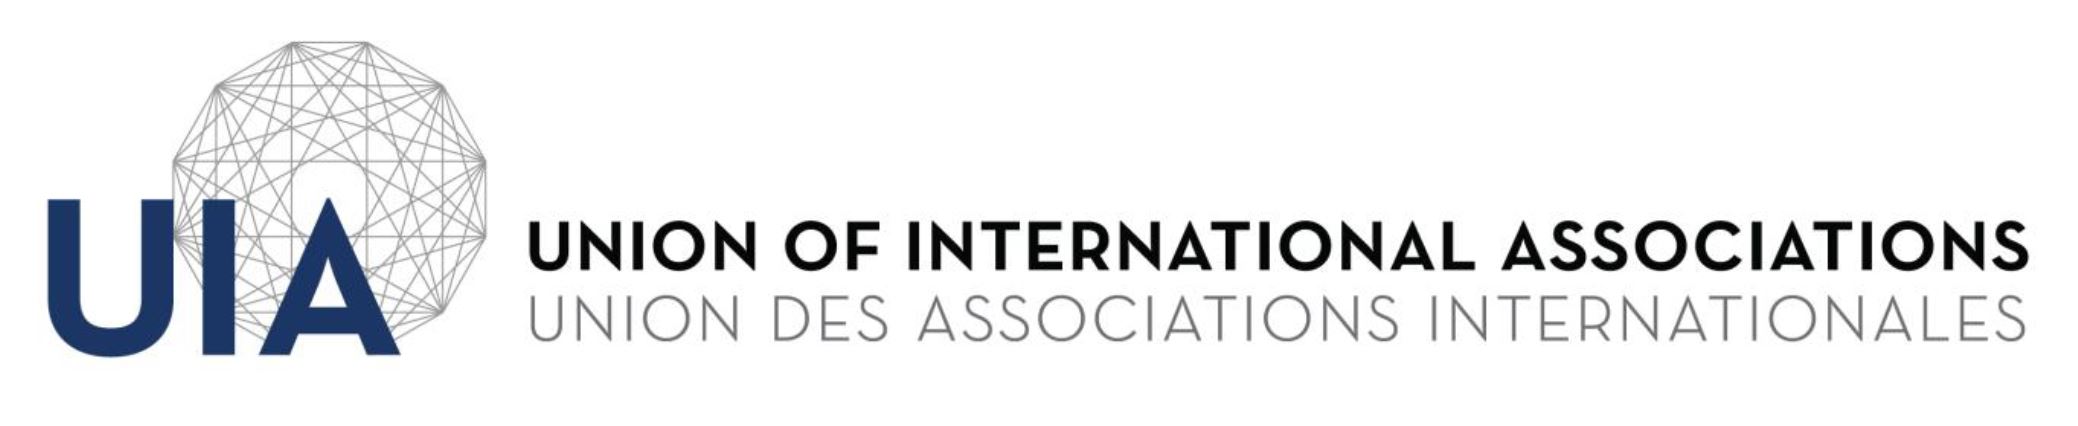 Union of International Associations (UIA)